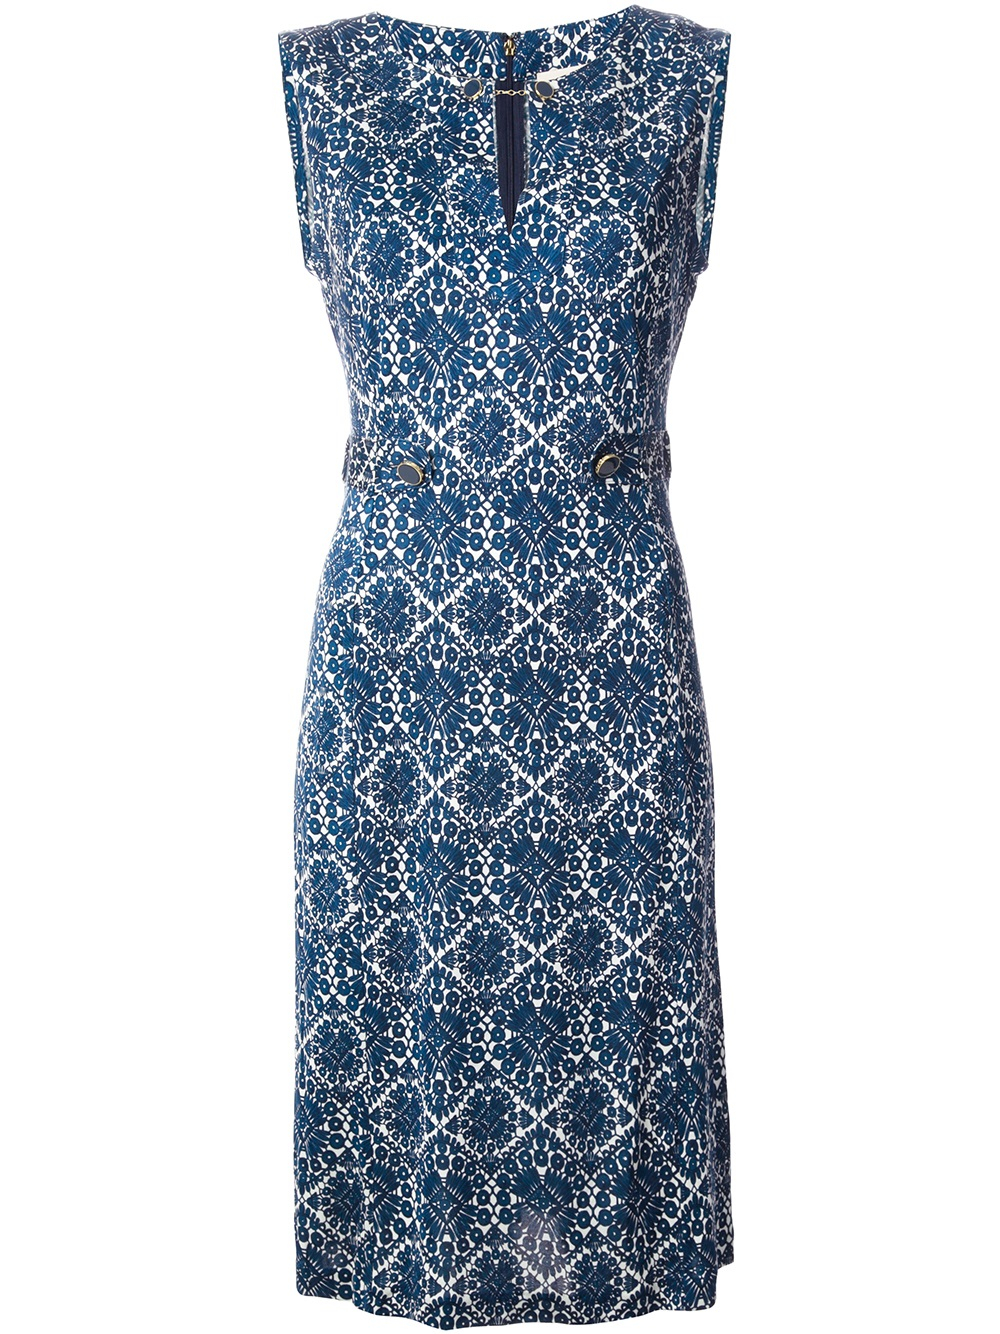 Lyst - Tory Burch Printed Dress in Blue